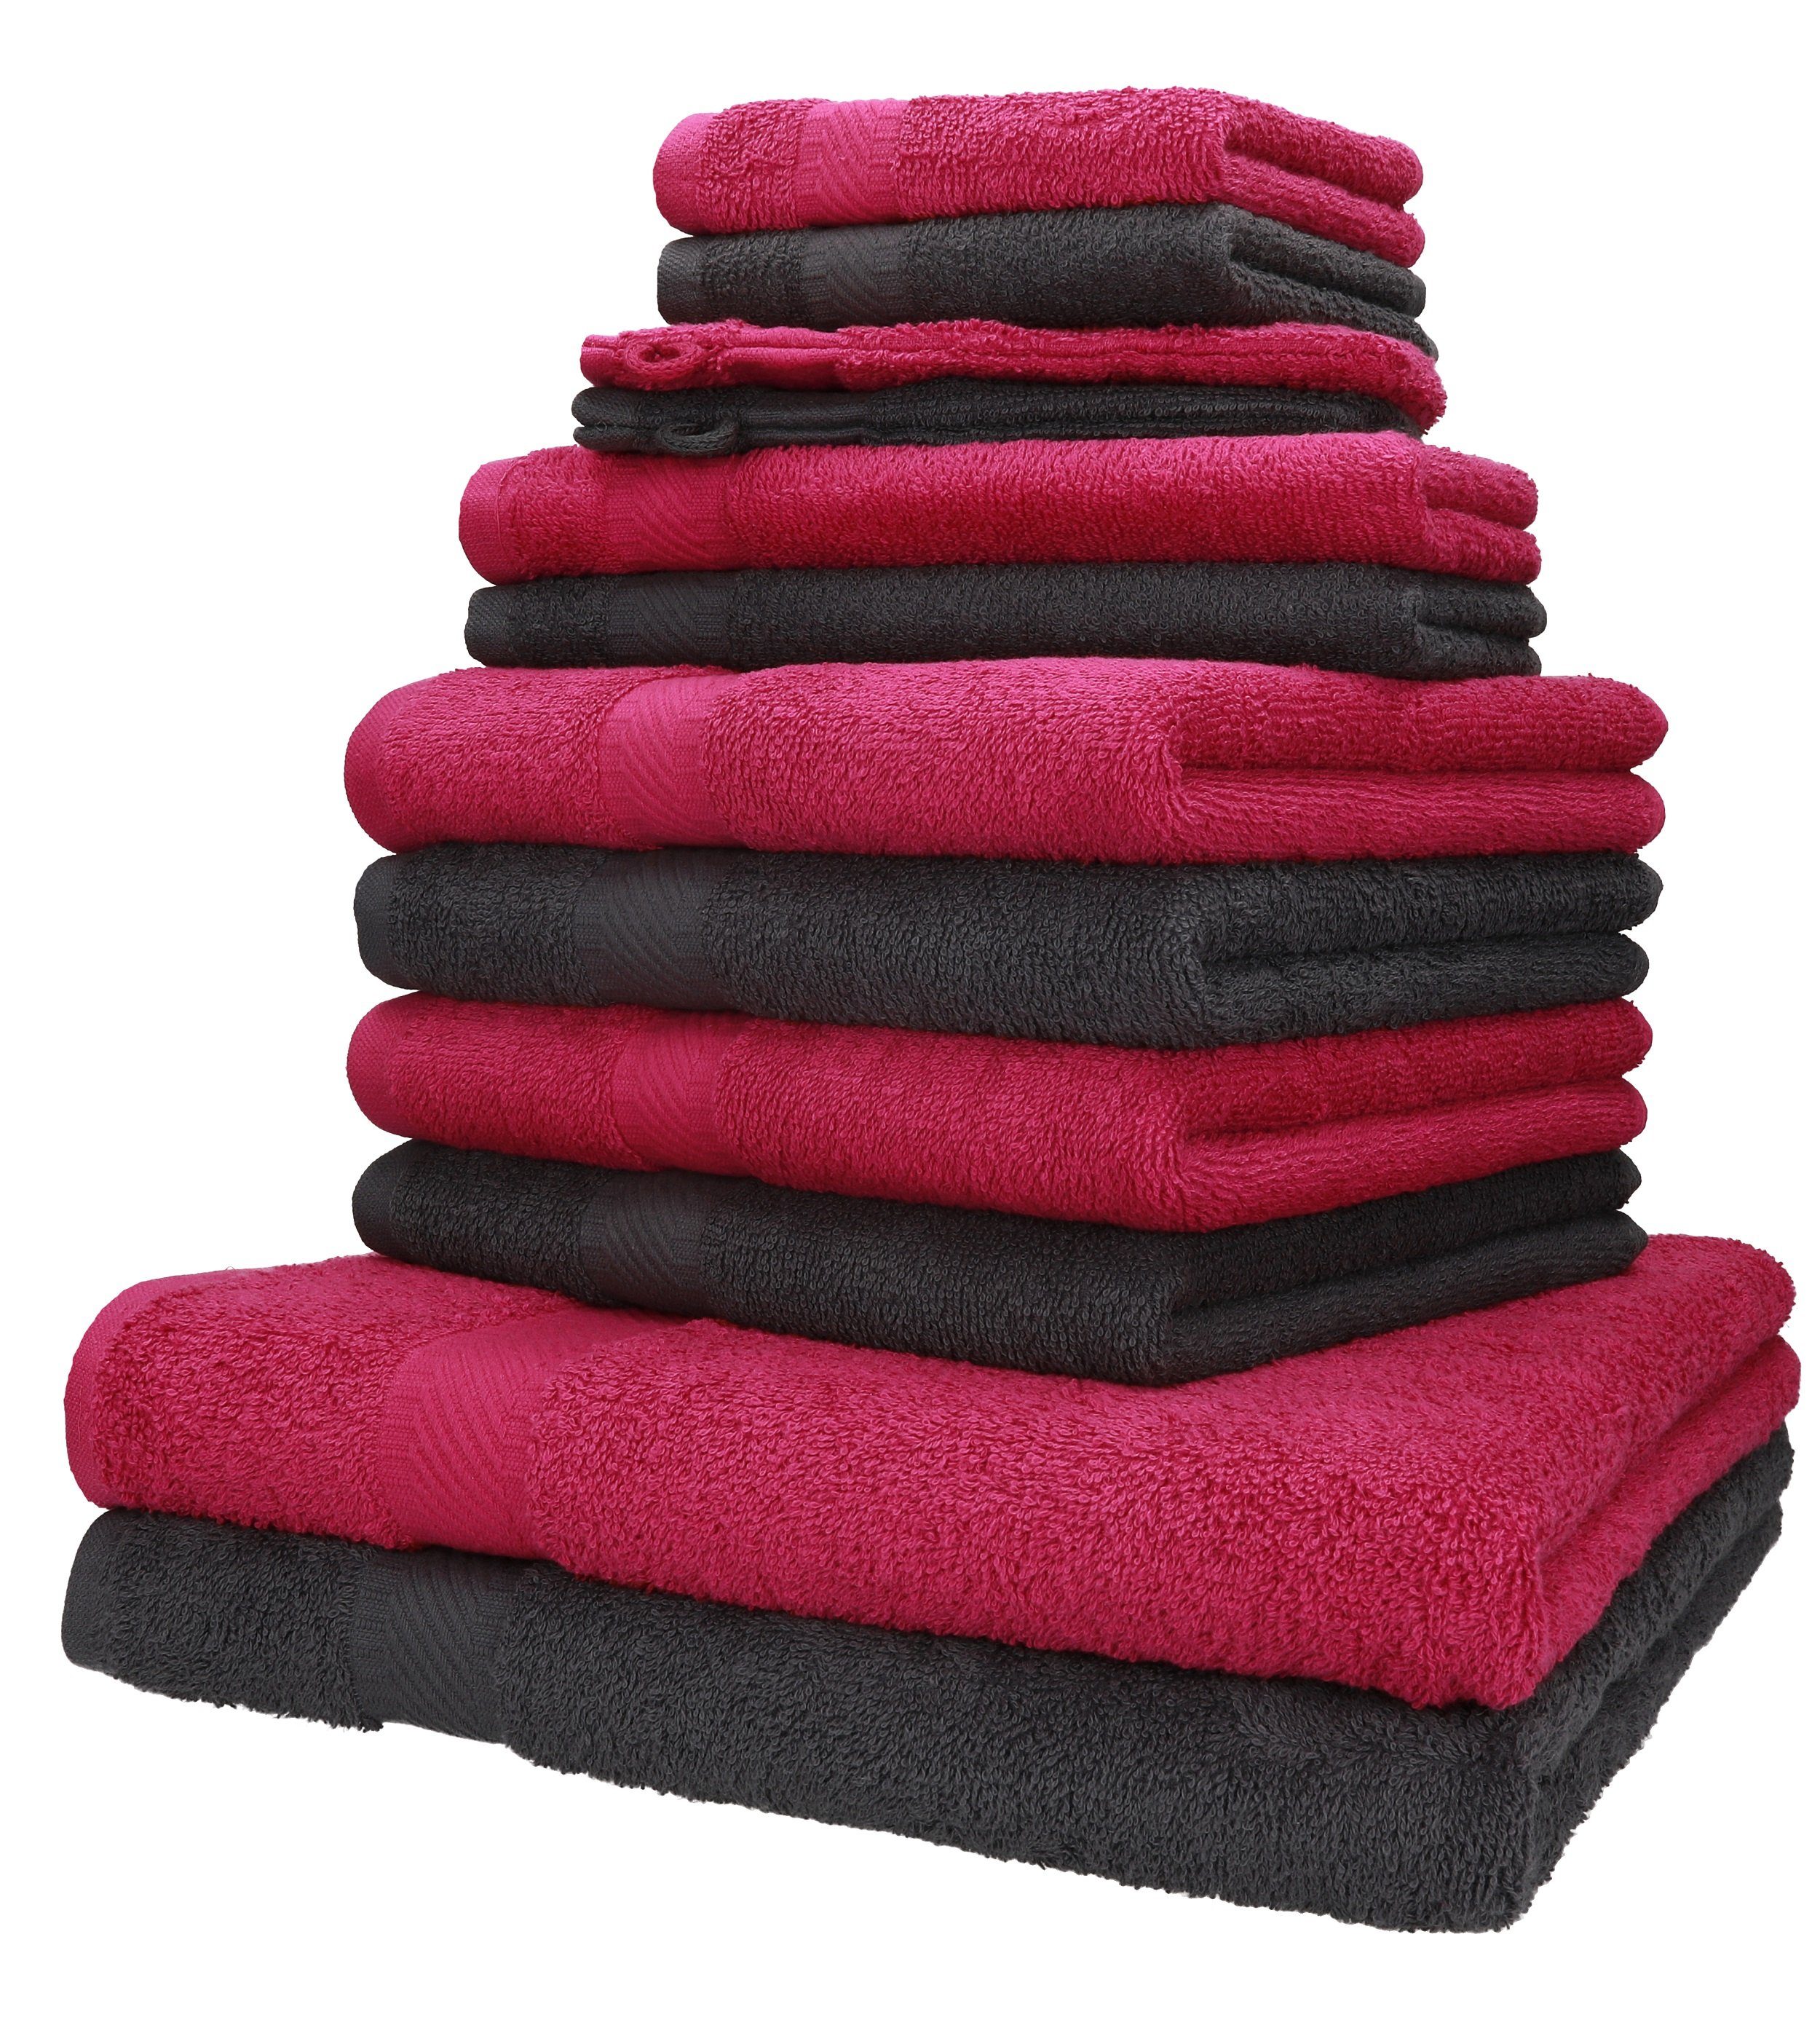 Betz Handtuch Set 12-tlg. Handtuch-Set PALERMO 100% Baumwolle 2 Liegetücher 4 Handtücher 2 Gästetücher 2 Seiftücher 2 Waschhandschuhe Farbe cranberry und anthrazit, 100% Baumwolle, (12-tlg) | Handtuch-Sets